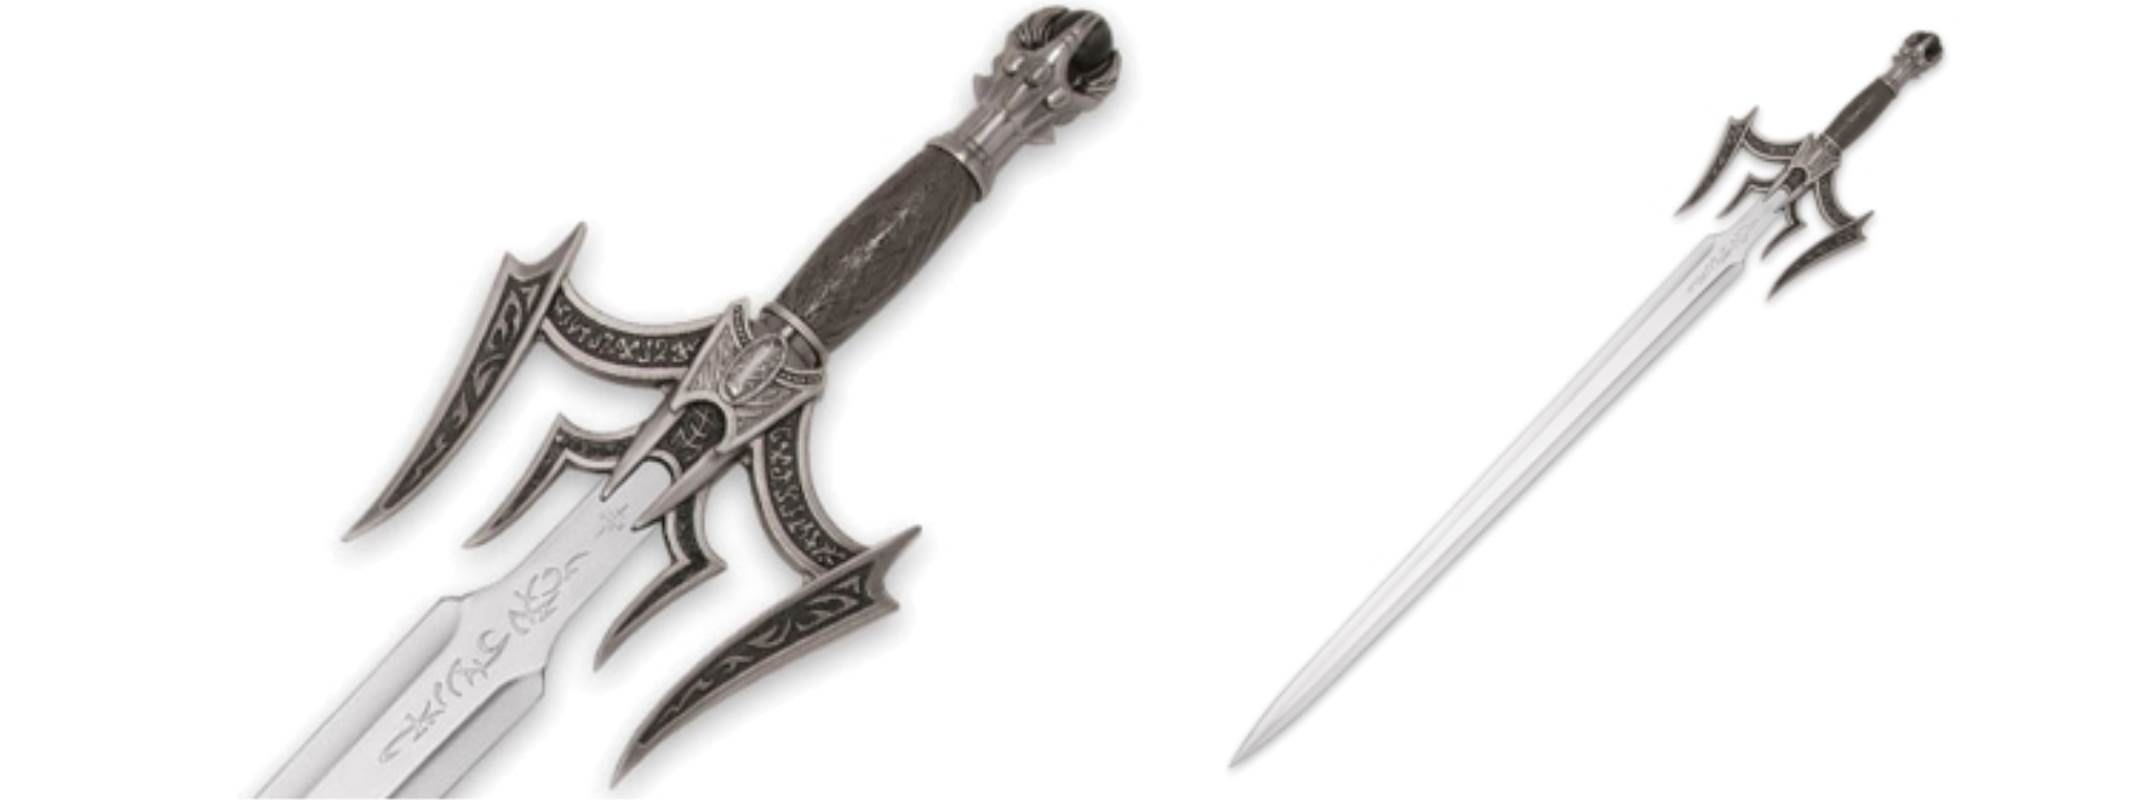 Luciendar -The Sword of Light - Decorative Fantasy Swords at Reliks.com